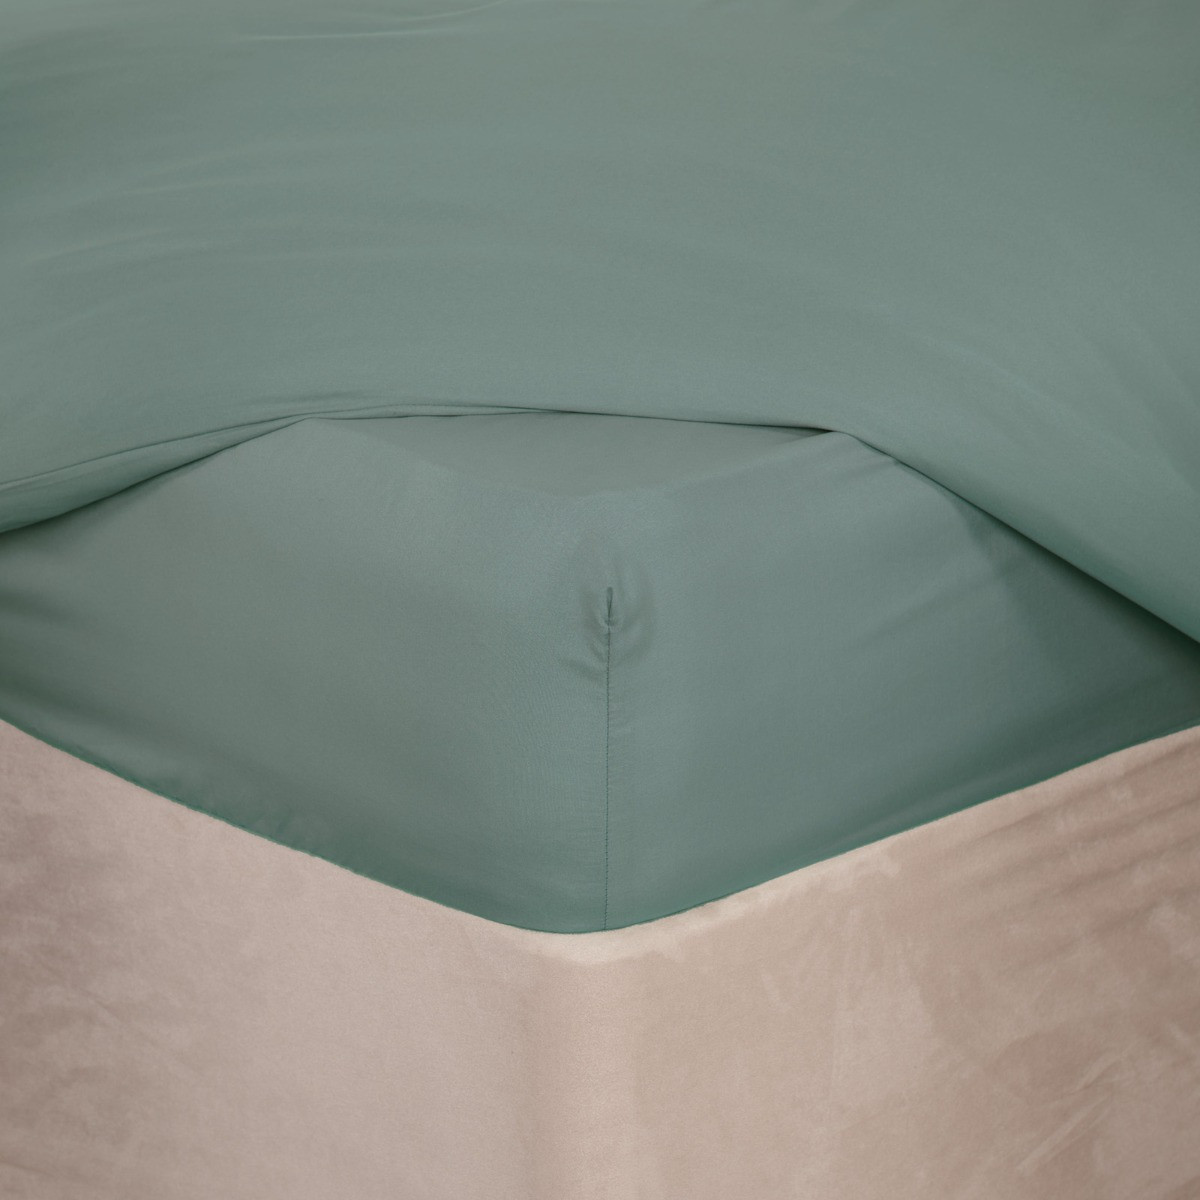 Brentfords Plain Dye Bed Fitted Sheet Soft Microfibre - Duck Egg>